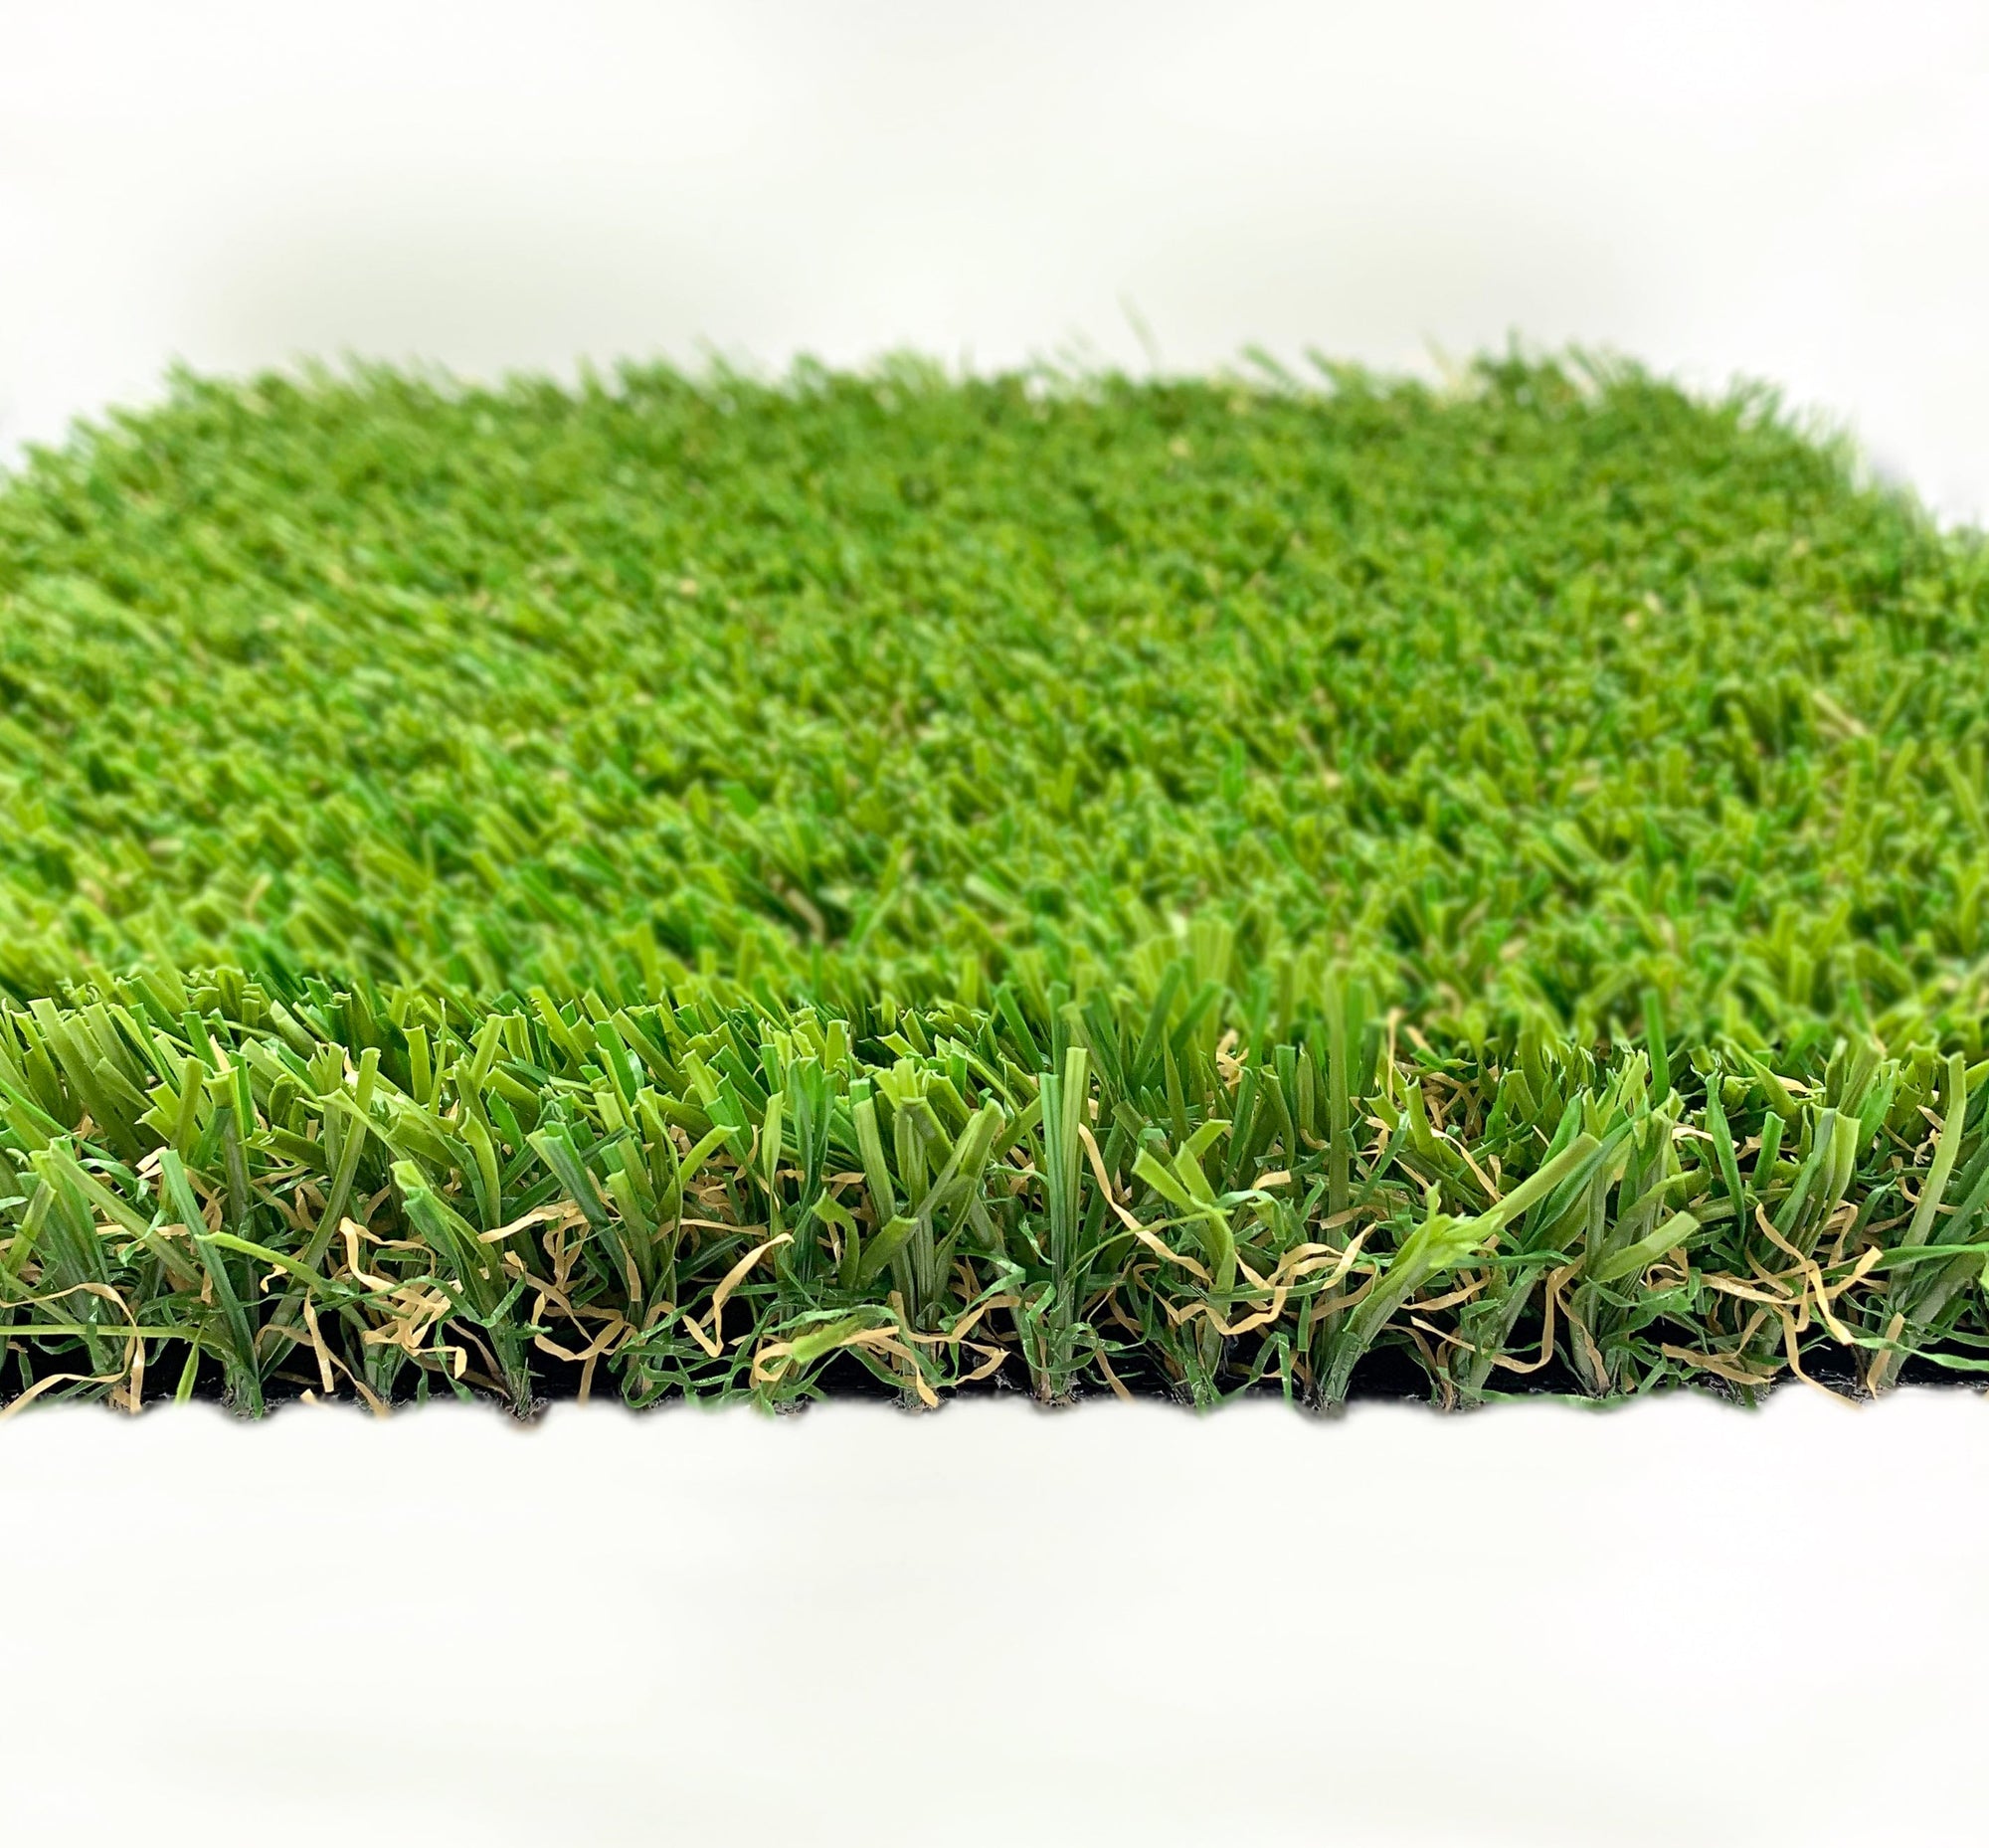 Village Park-Synthetic Grass Turf-Shawgrass-Shaw-320-Urethane-1.25-KNB Mills